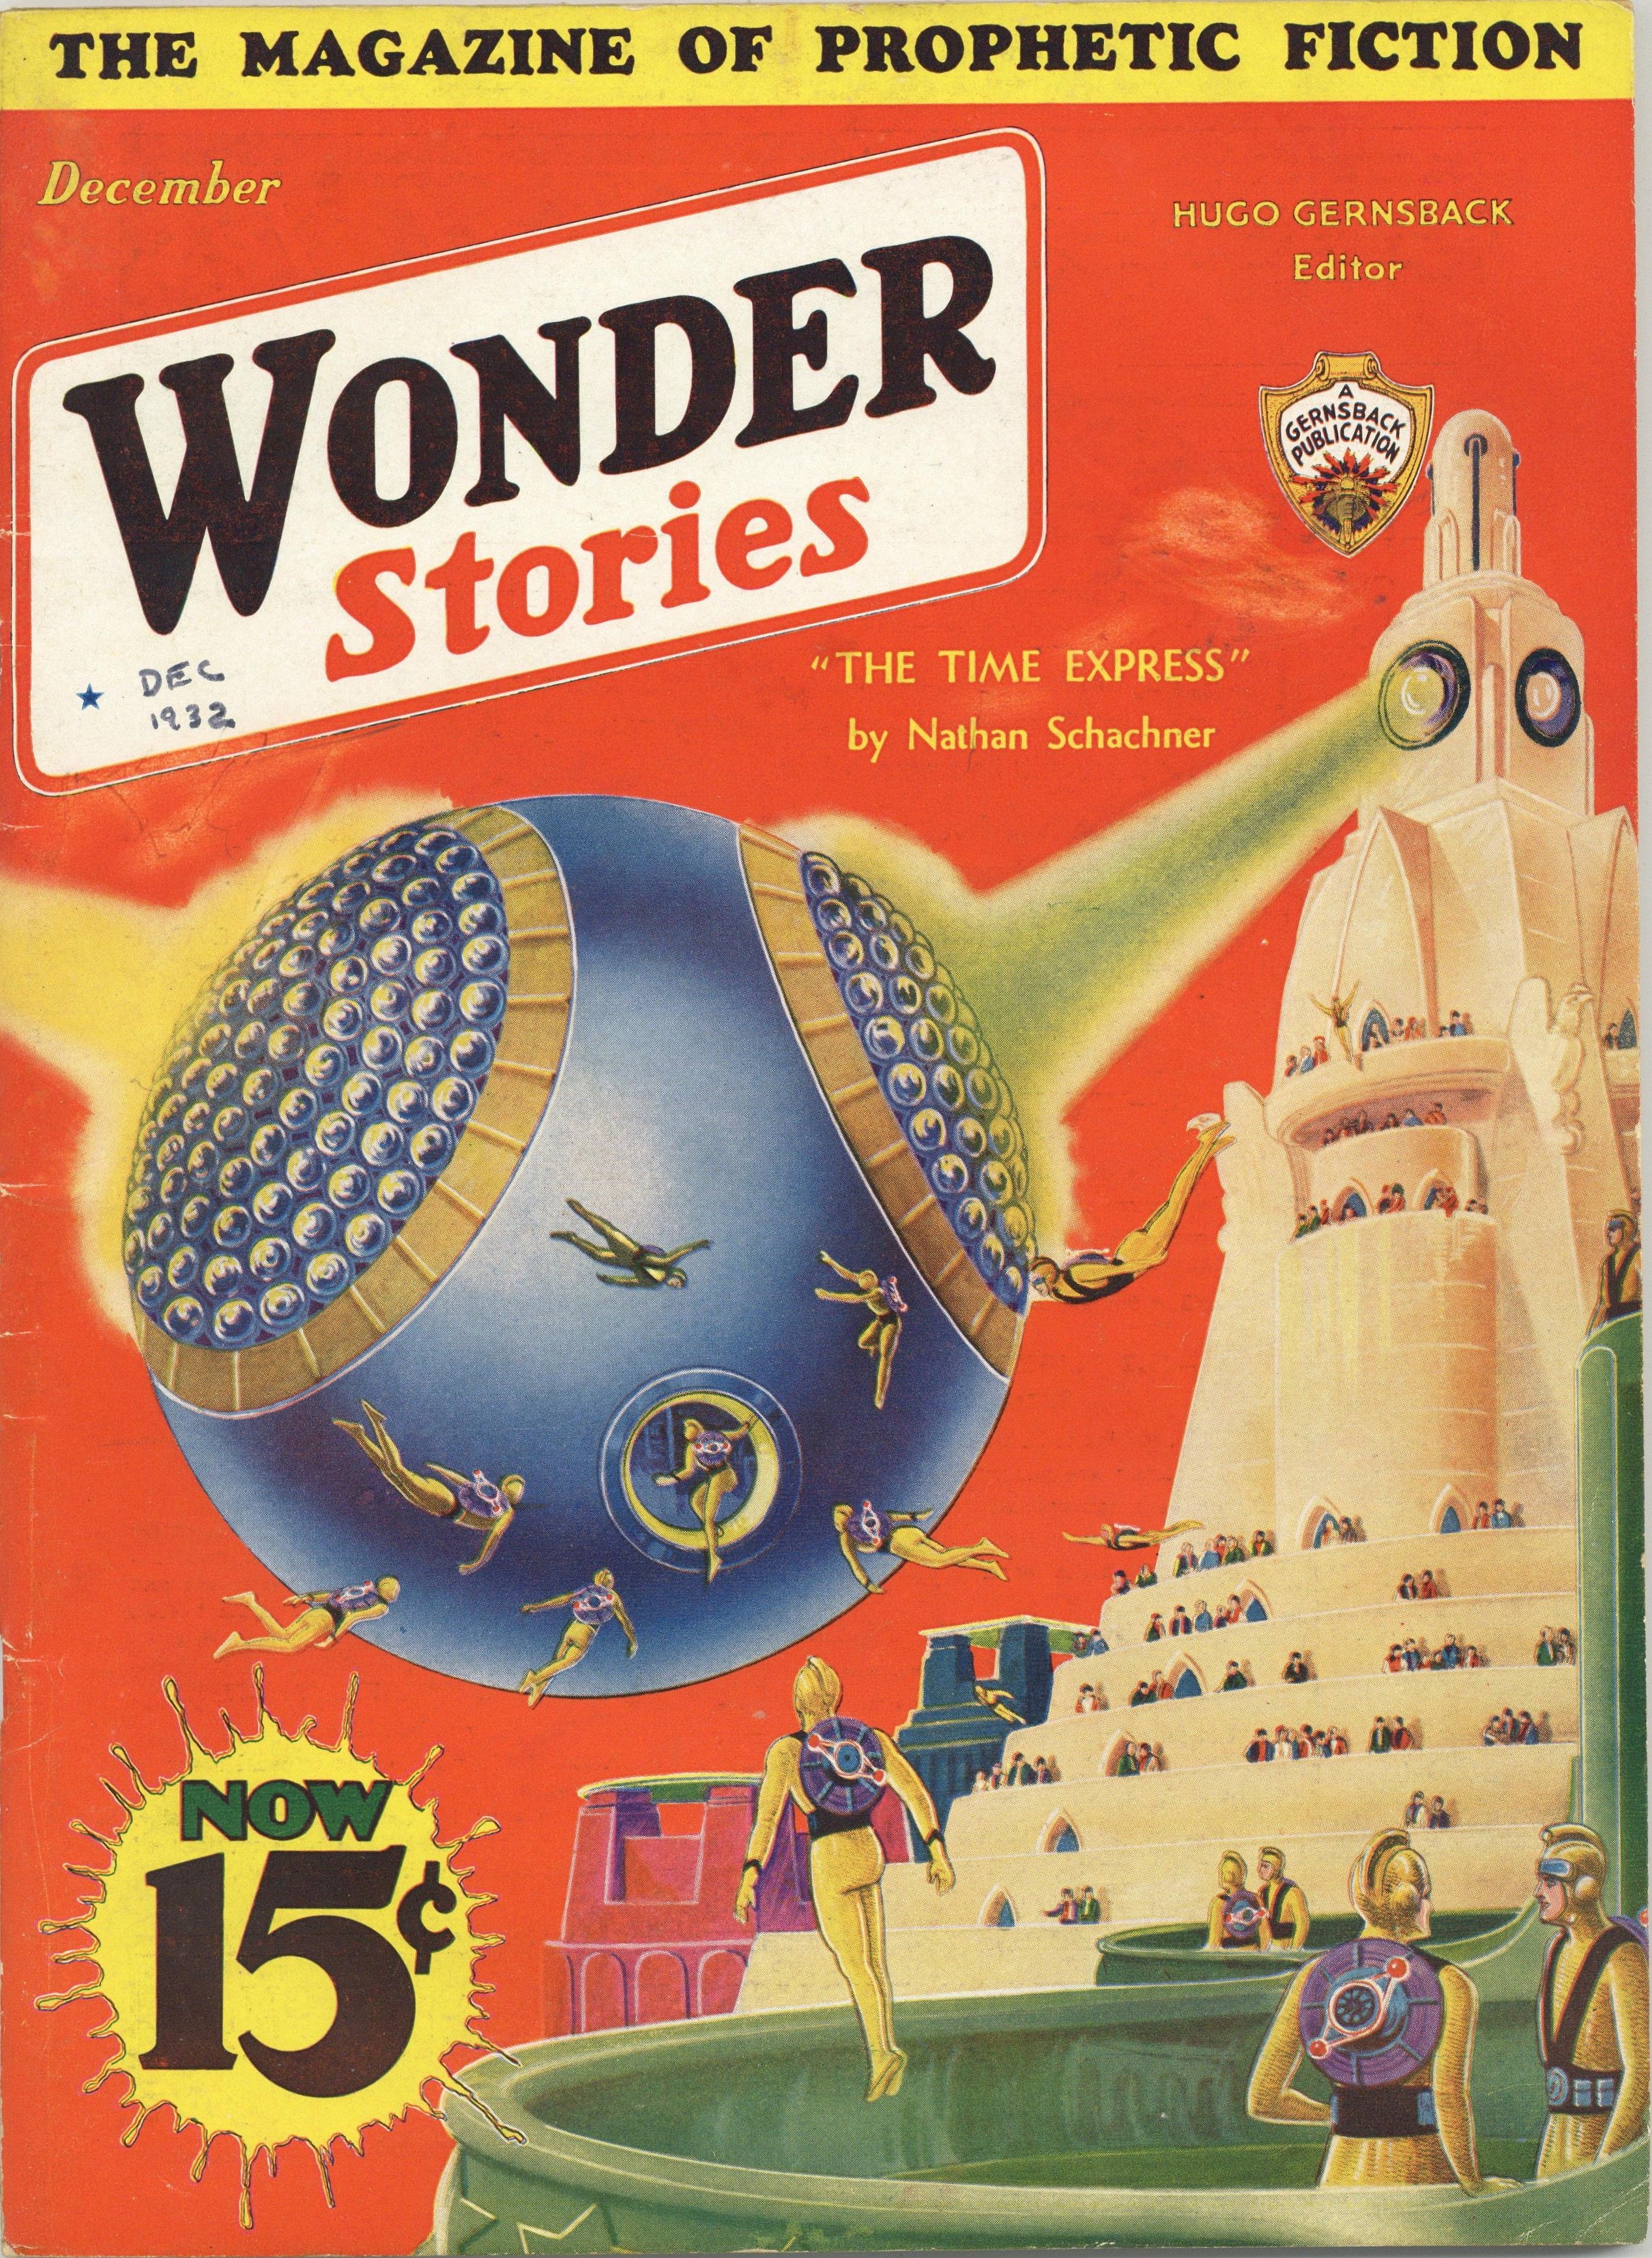 Air wonder. Wonder Magazine Series 1984. World of Wonder журнал. Wonder stories. World of Wonder журнал на русском.